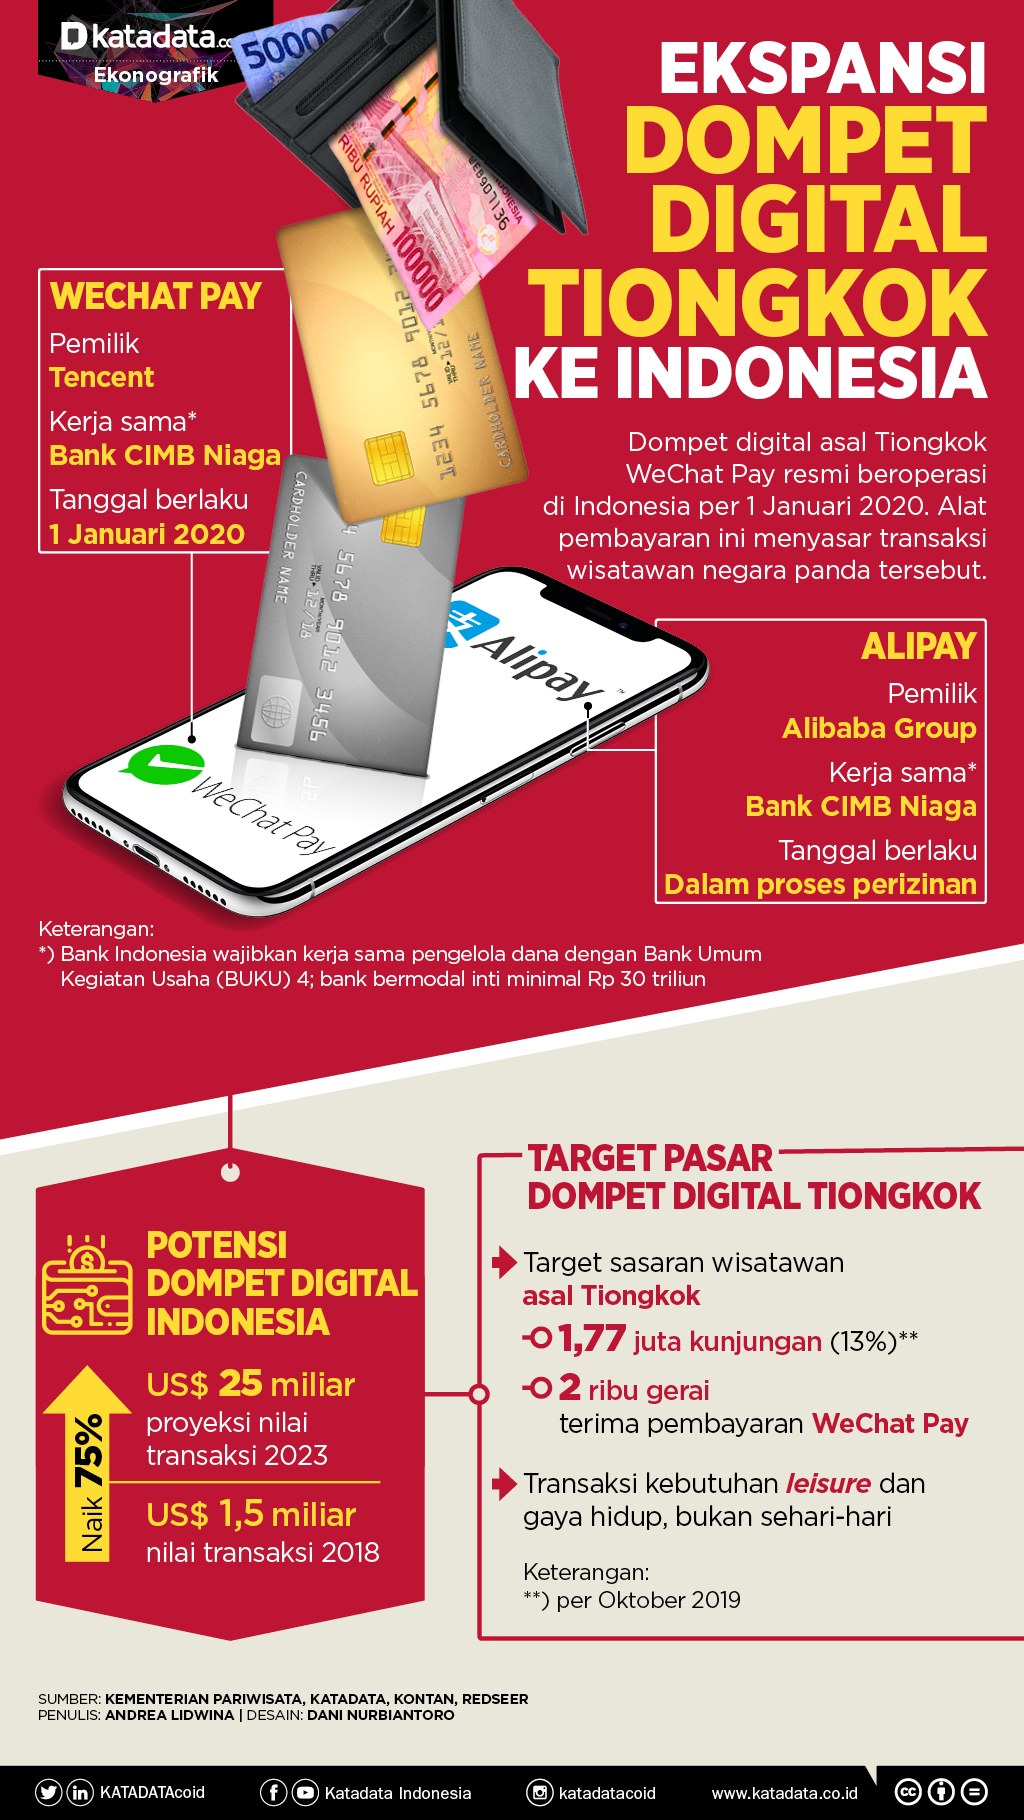 dompet digital tiongkok